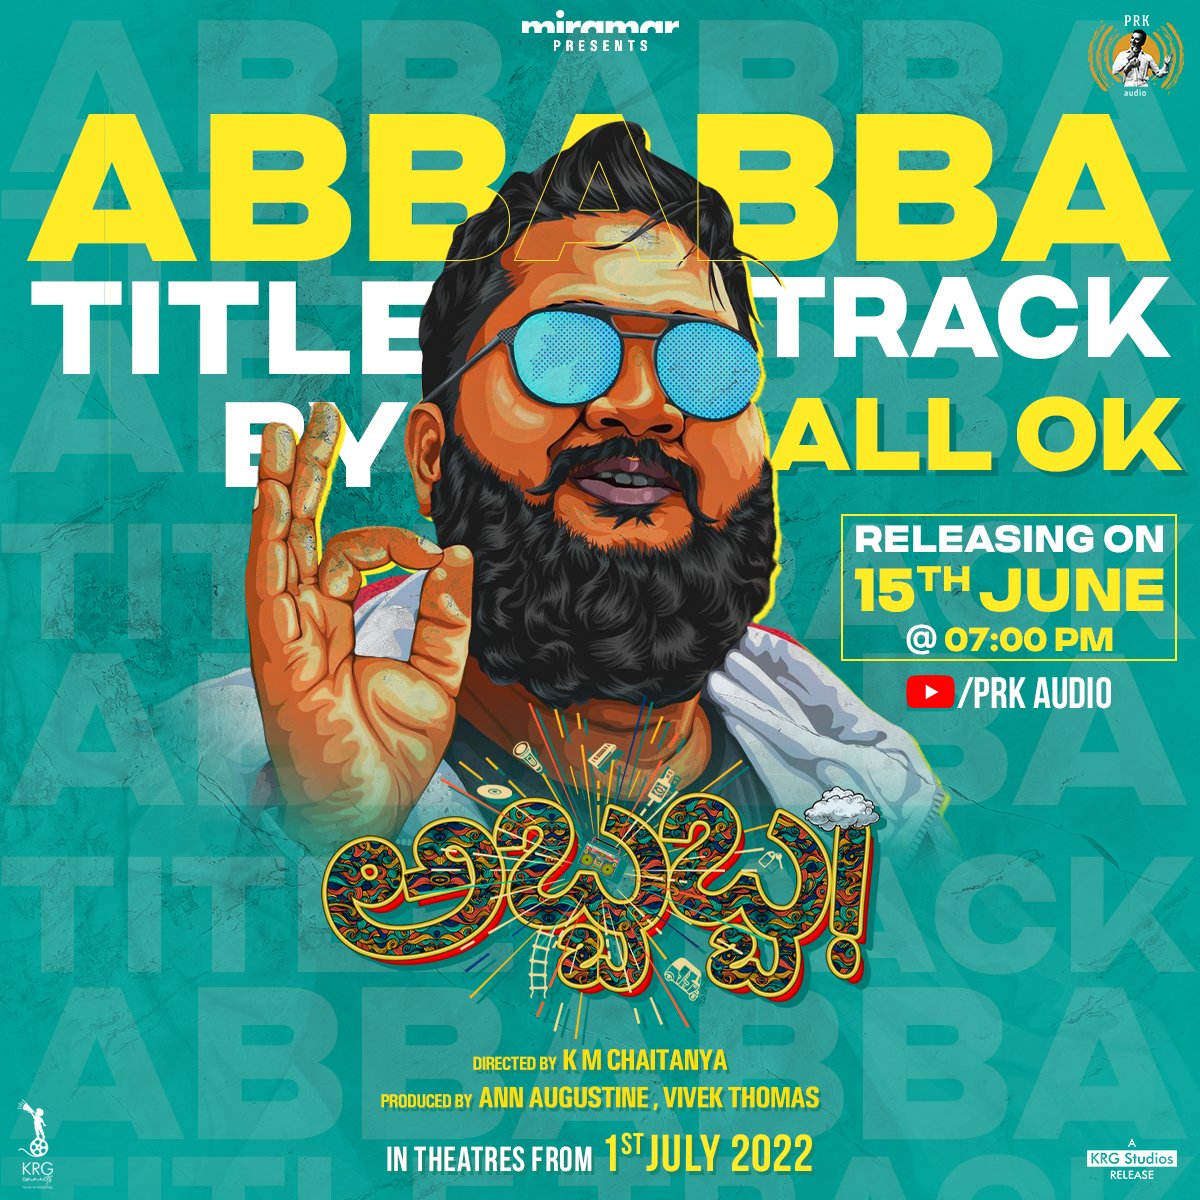 A ಜಬರ್ದಸ್ತ್ Title Track by @allok02 is all set to make you go #Abbabba!🤩

Releasing TOMORROW at 7PM on @PRKAudio YT Channel

@kmchaitanya #MiramarFilms @LikithShetty @amrutha_iyengar @actorajayraj #ThandavRam @AcharDhanraj #AnnAugustine #VivekThomas @KRG_Studios @KRG_Connects